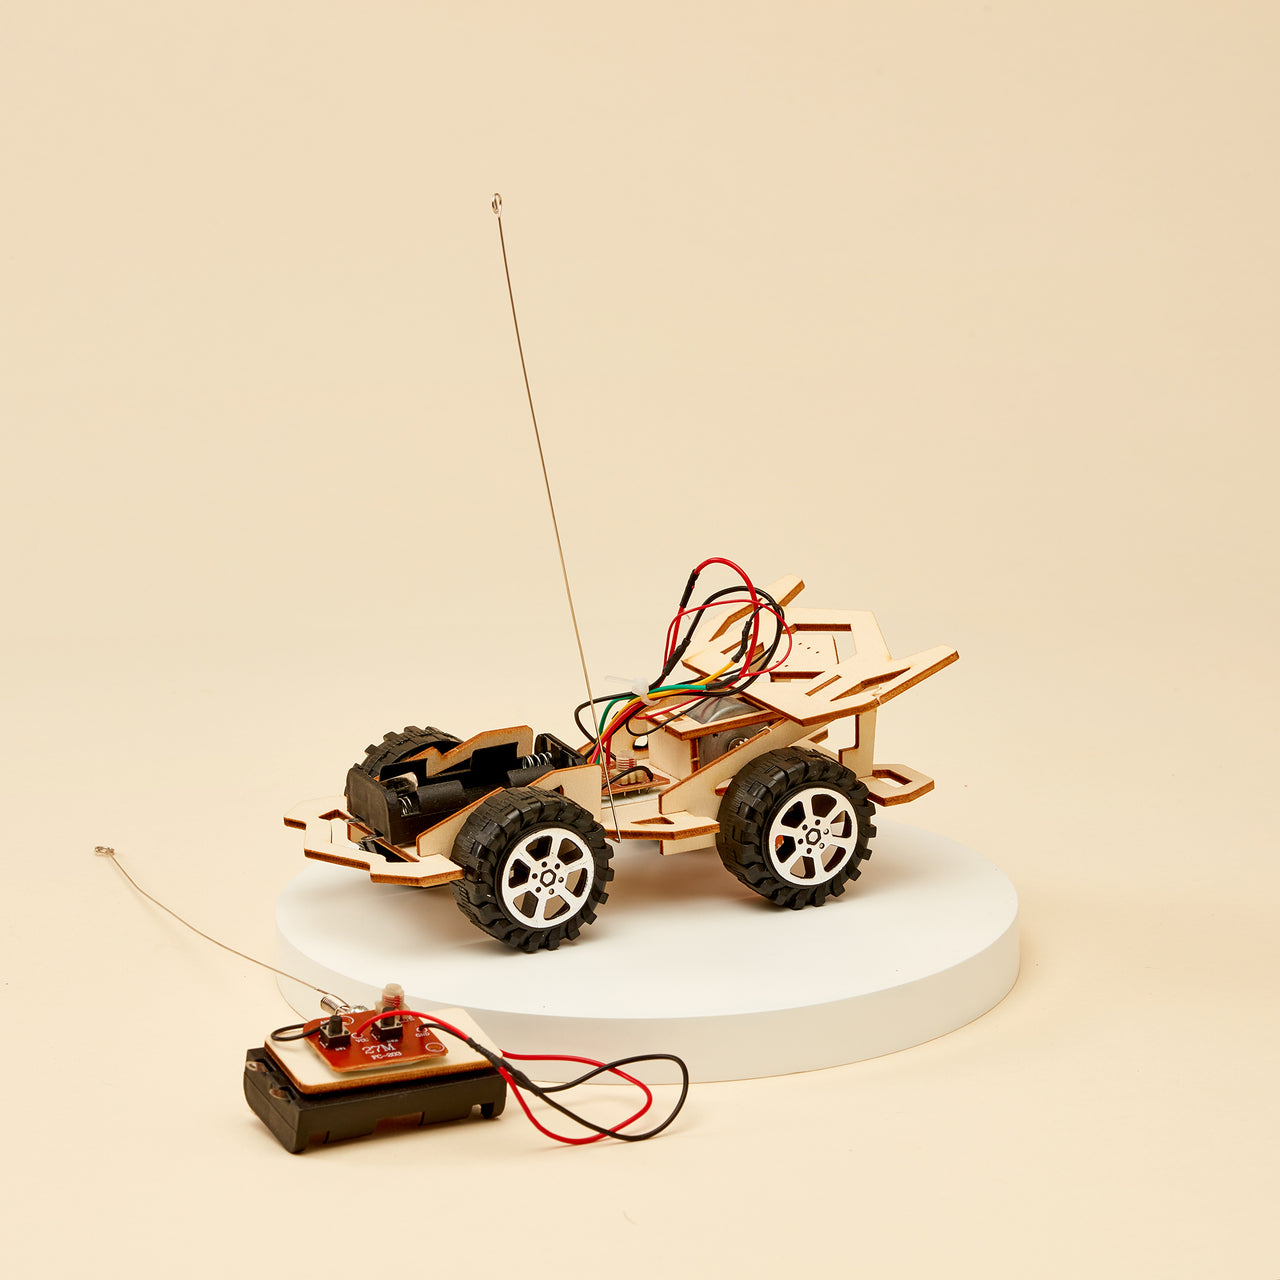 Kit de bricolaje para coche radiocontrolado CreateKit